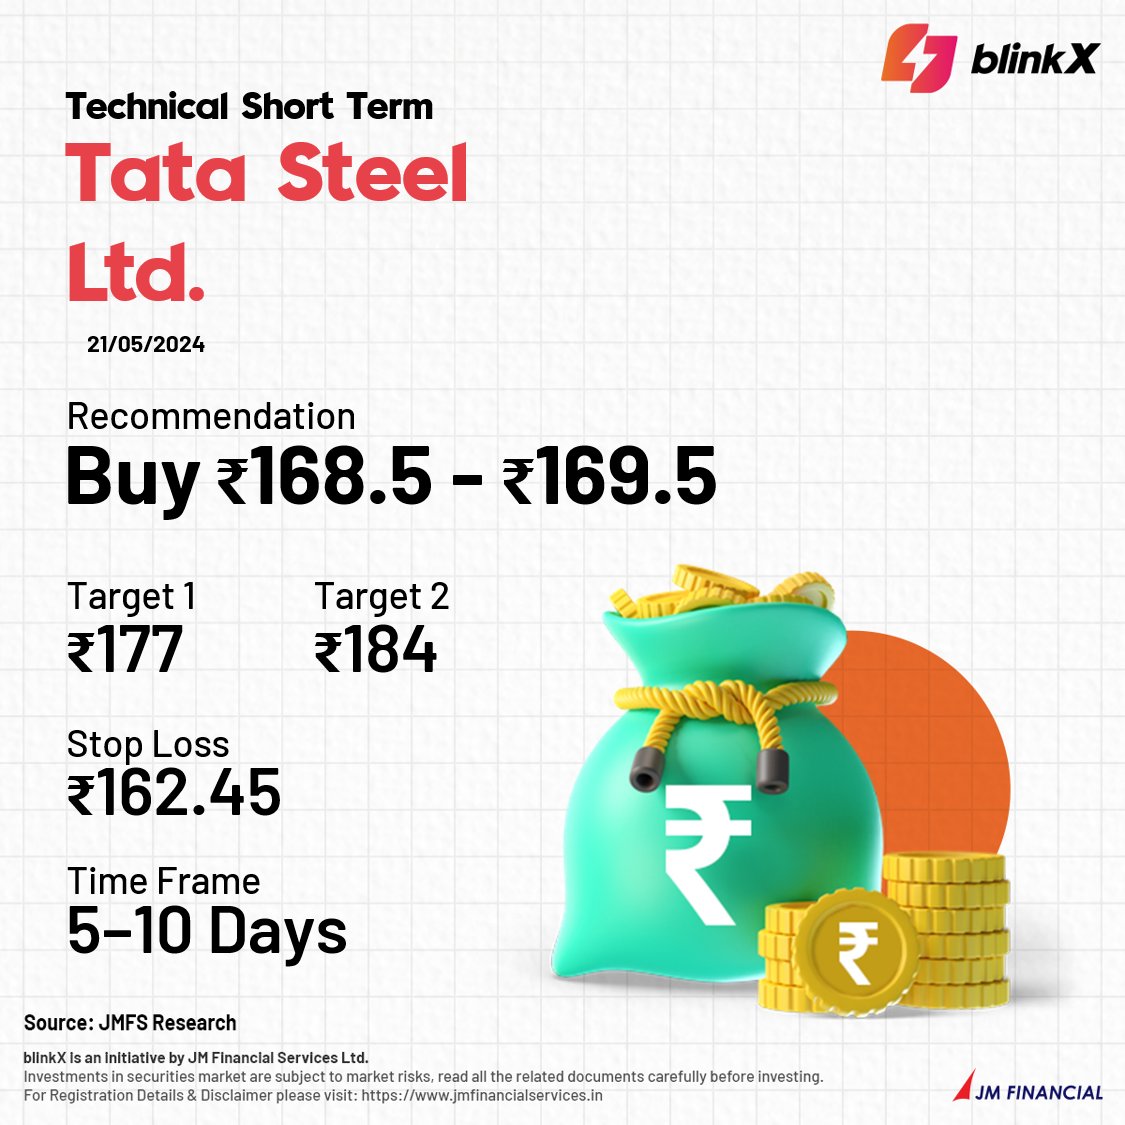 Technical Short Term

BUY – Tata Steel Ltd.

Get the app now:bit.ly/4cvU8YK
 
#Tatasteel #steel #tatasteelcompany #tatapowershare #TataGroup #tata #finance #stocks #sensex #nifty #stockmarketnews #sharemarketnew #stocks #sharemarketindia #investing #news #investor